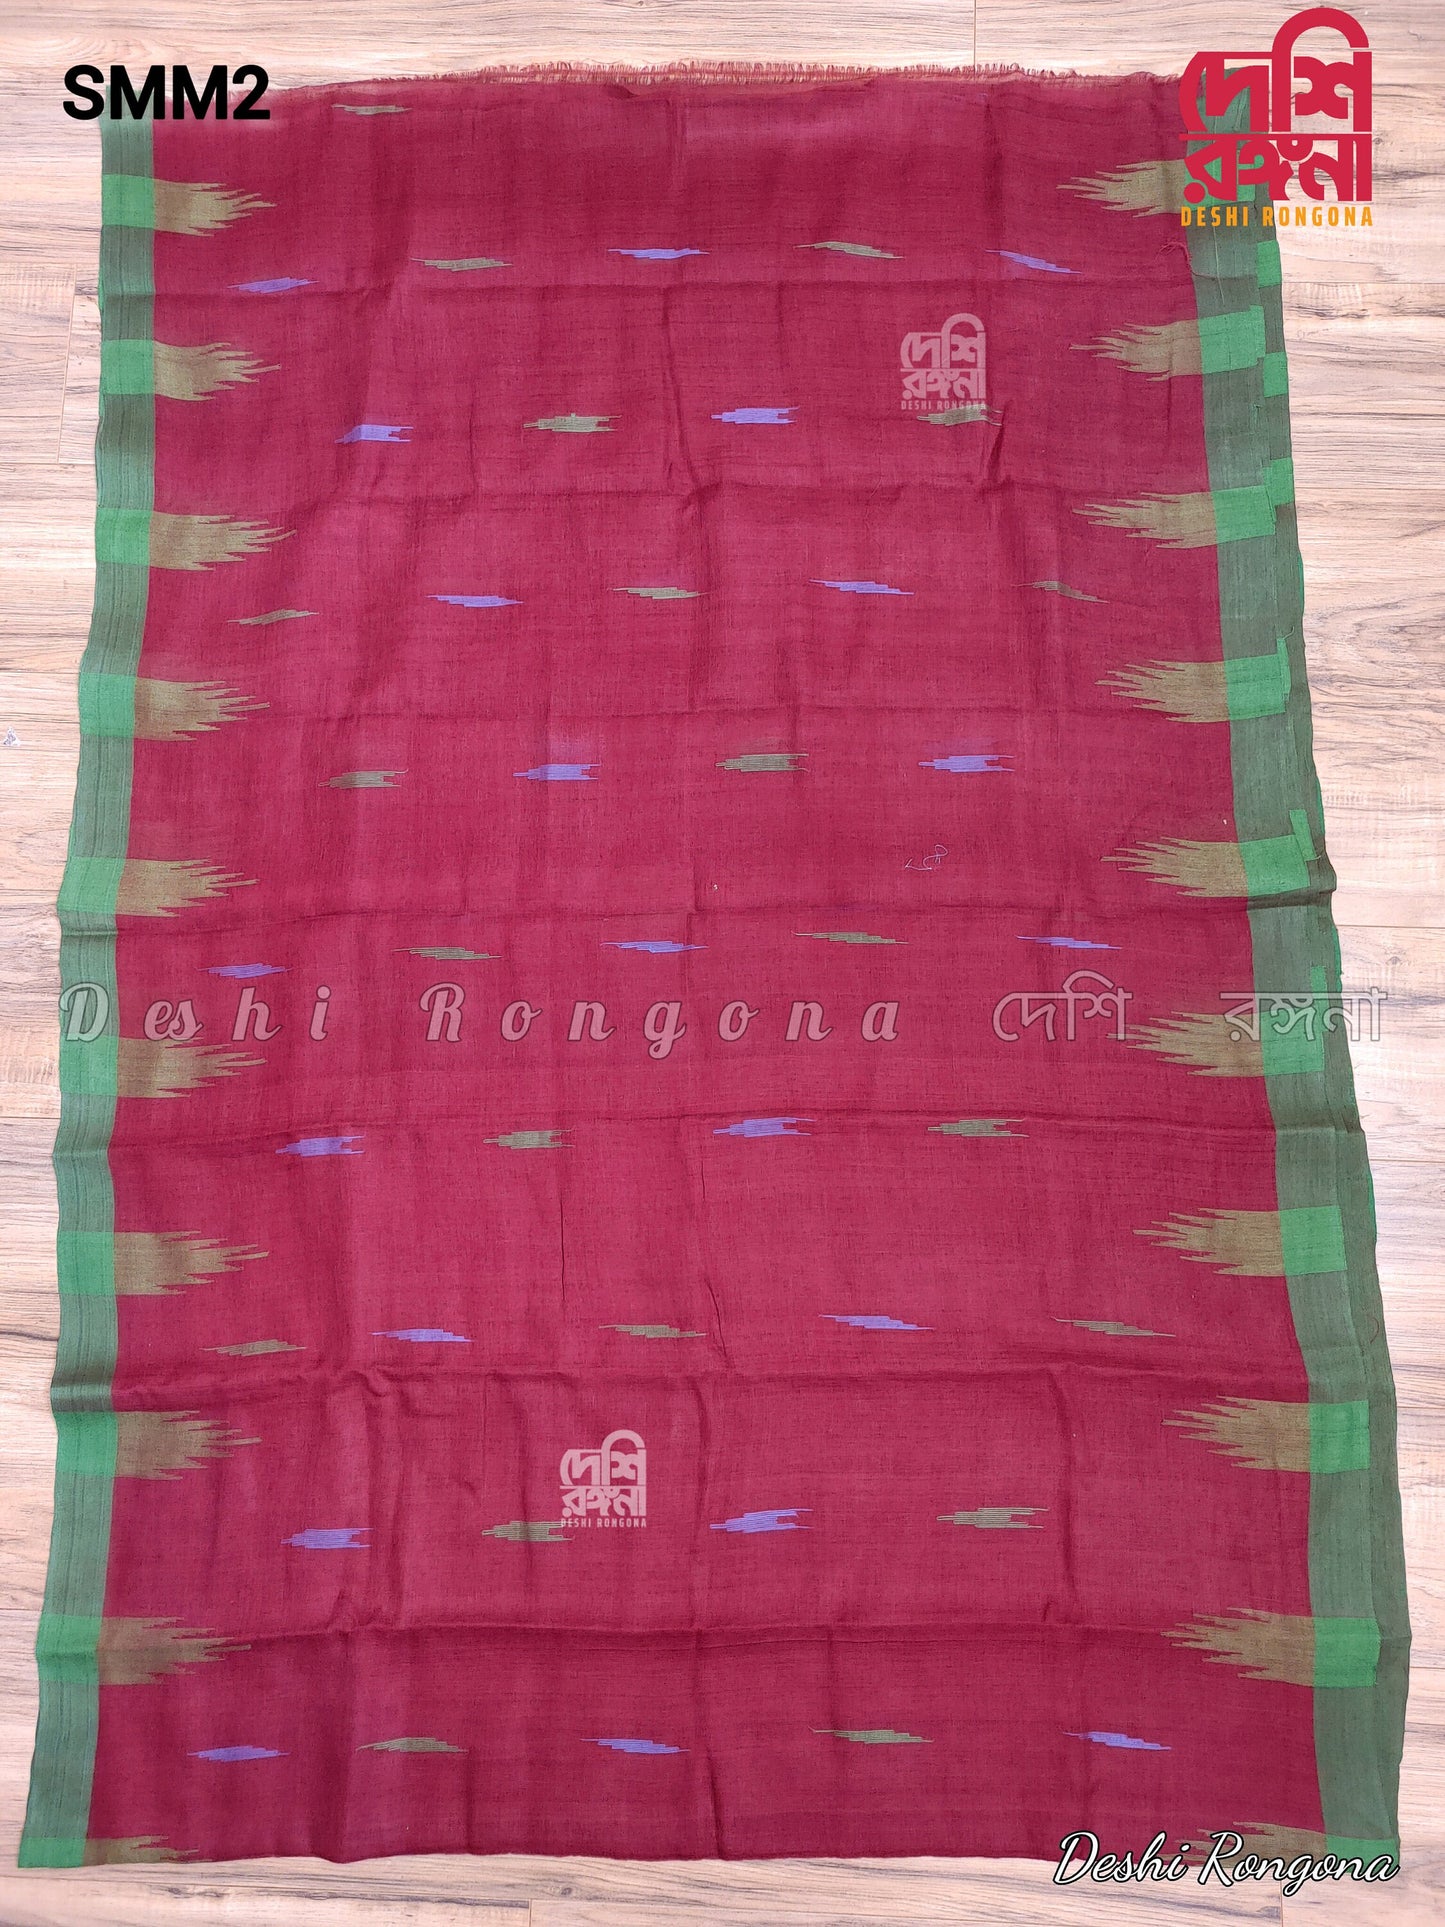 Sylheti Original Monipuri Handwoven Soft Cotton Saree, Maroon with Green Woven Border, Bangladeshi, Traditional Saree